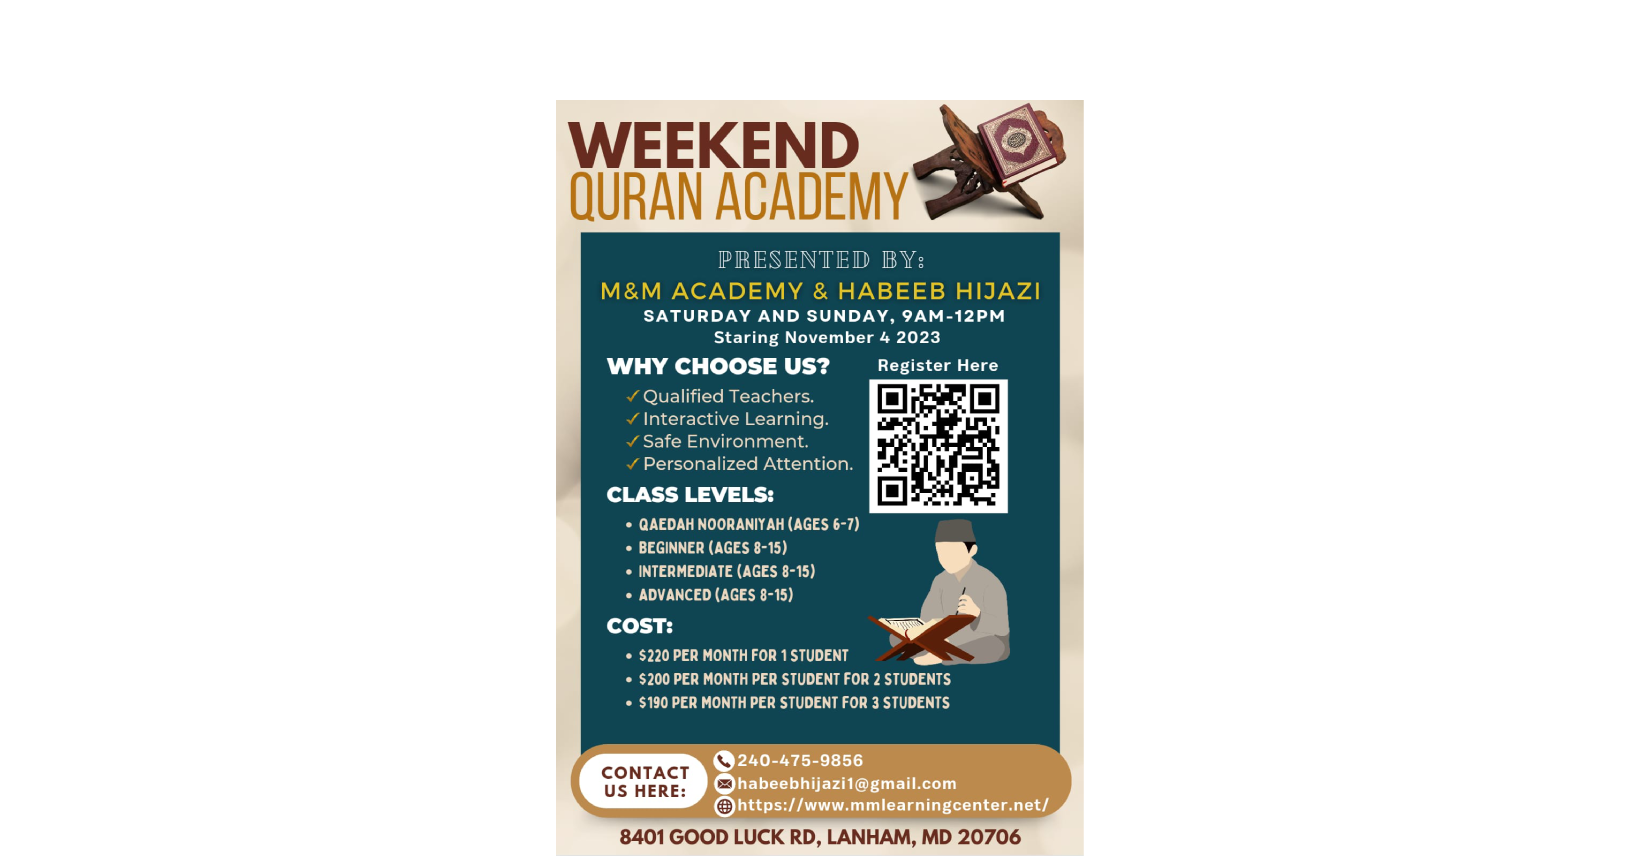 Weekend Quran Academy